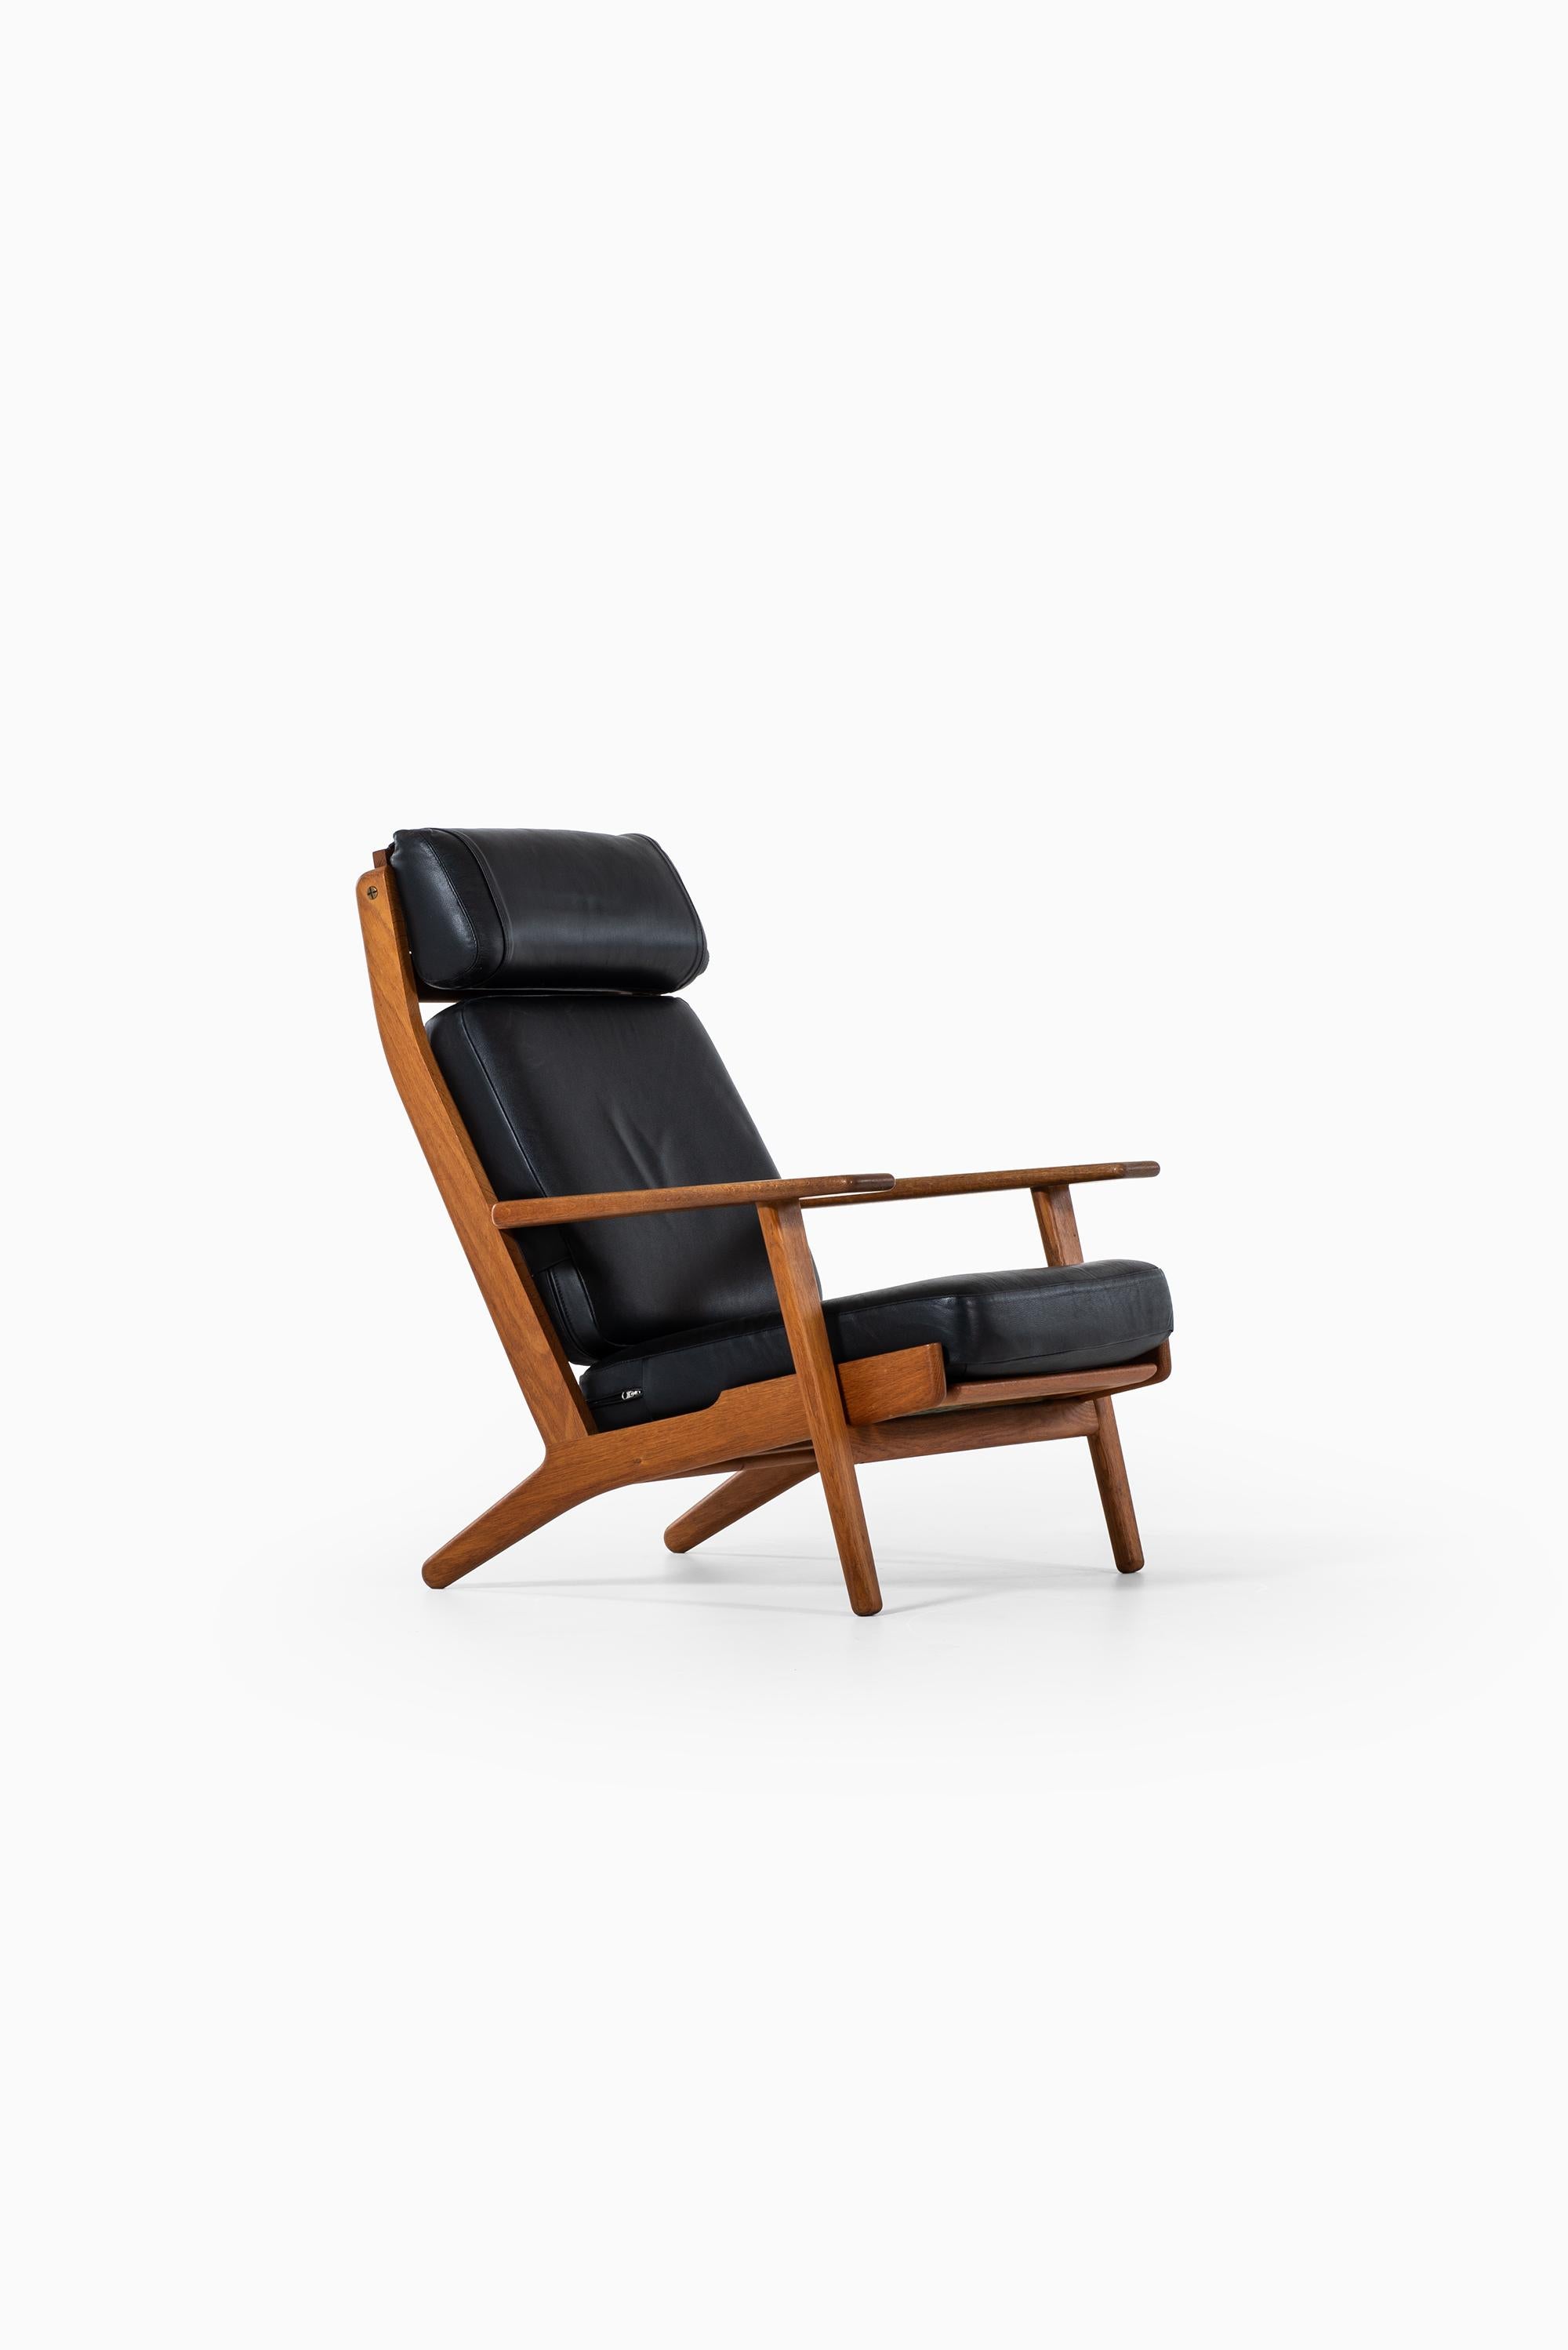 High backed easy chair model GE-290 designed by Hans Wegner. Produced by GETAMA in Denmark.